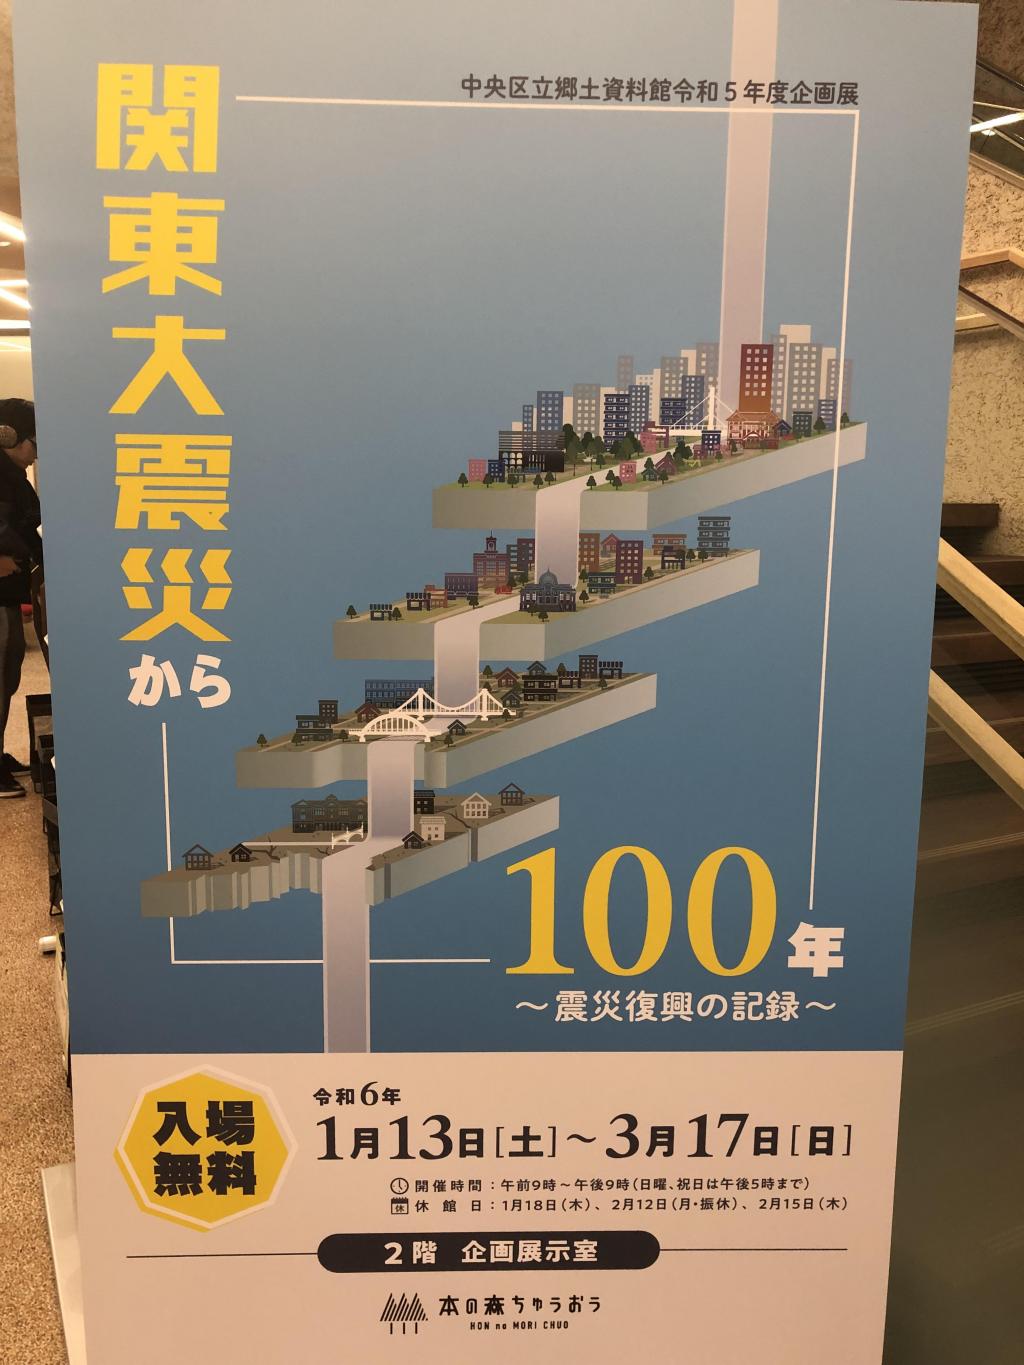 中央区立郷土資料館で学ぶ「関東大震災100年」